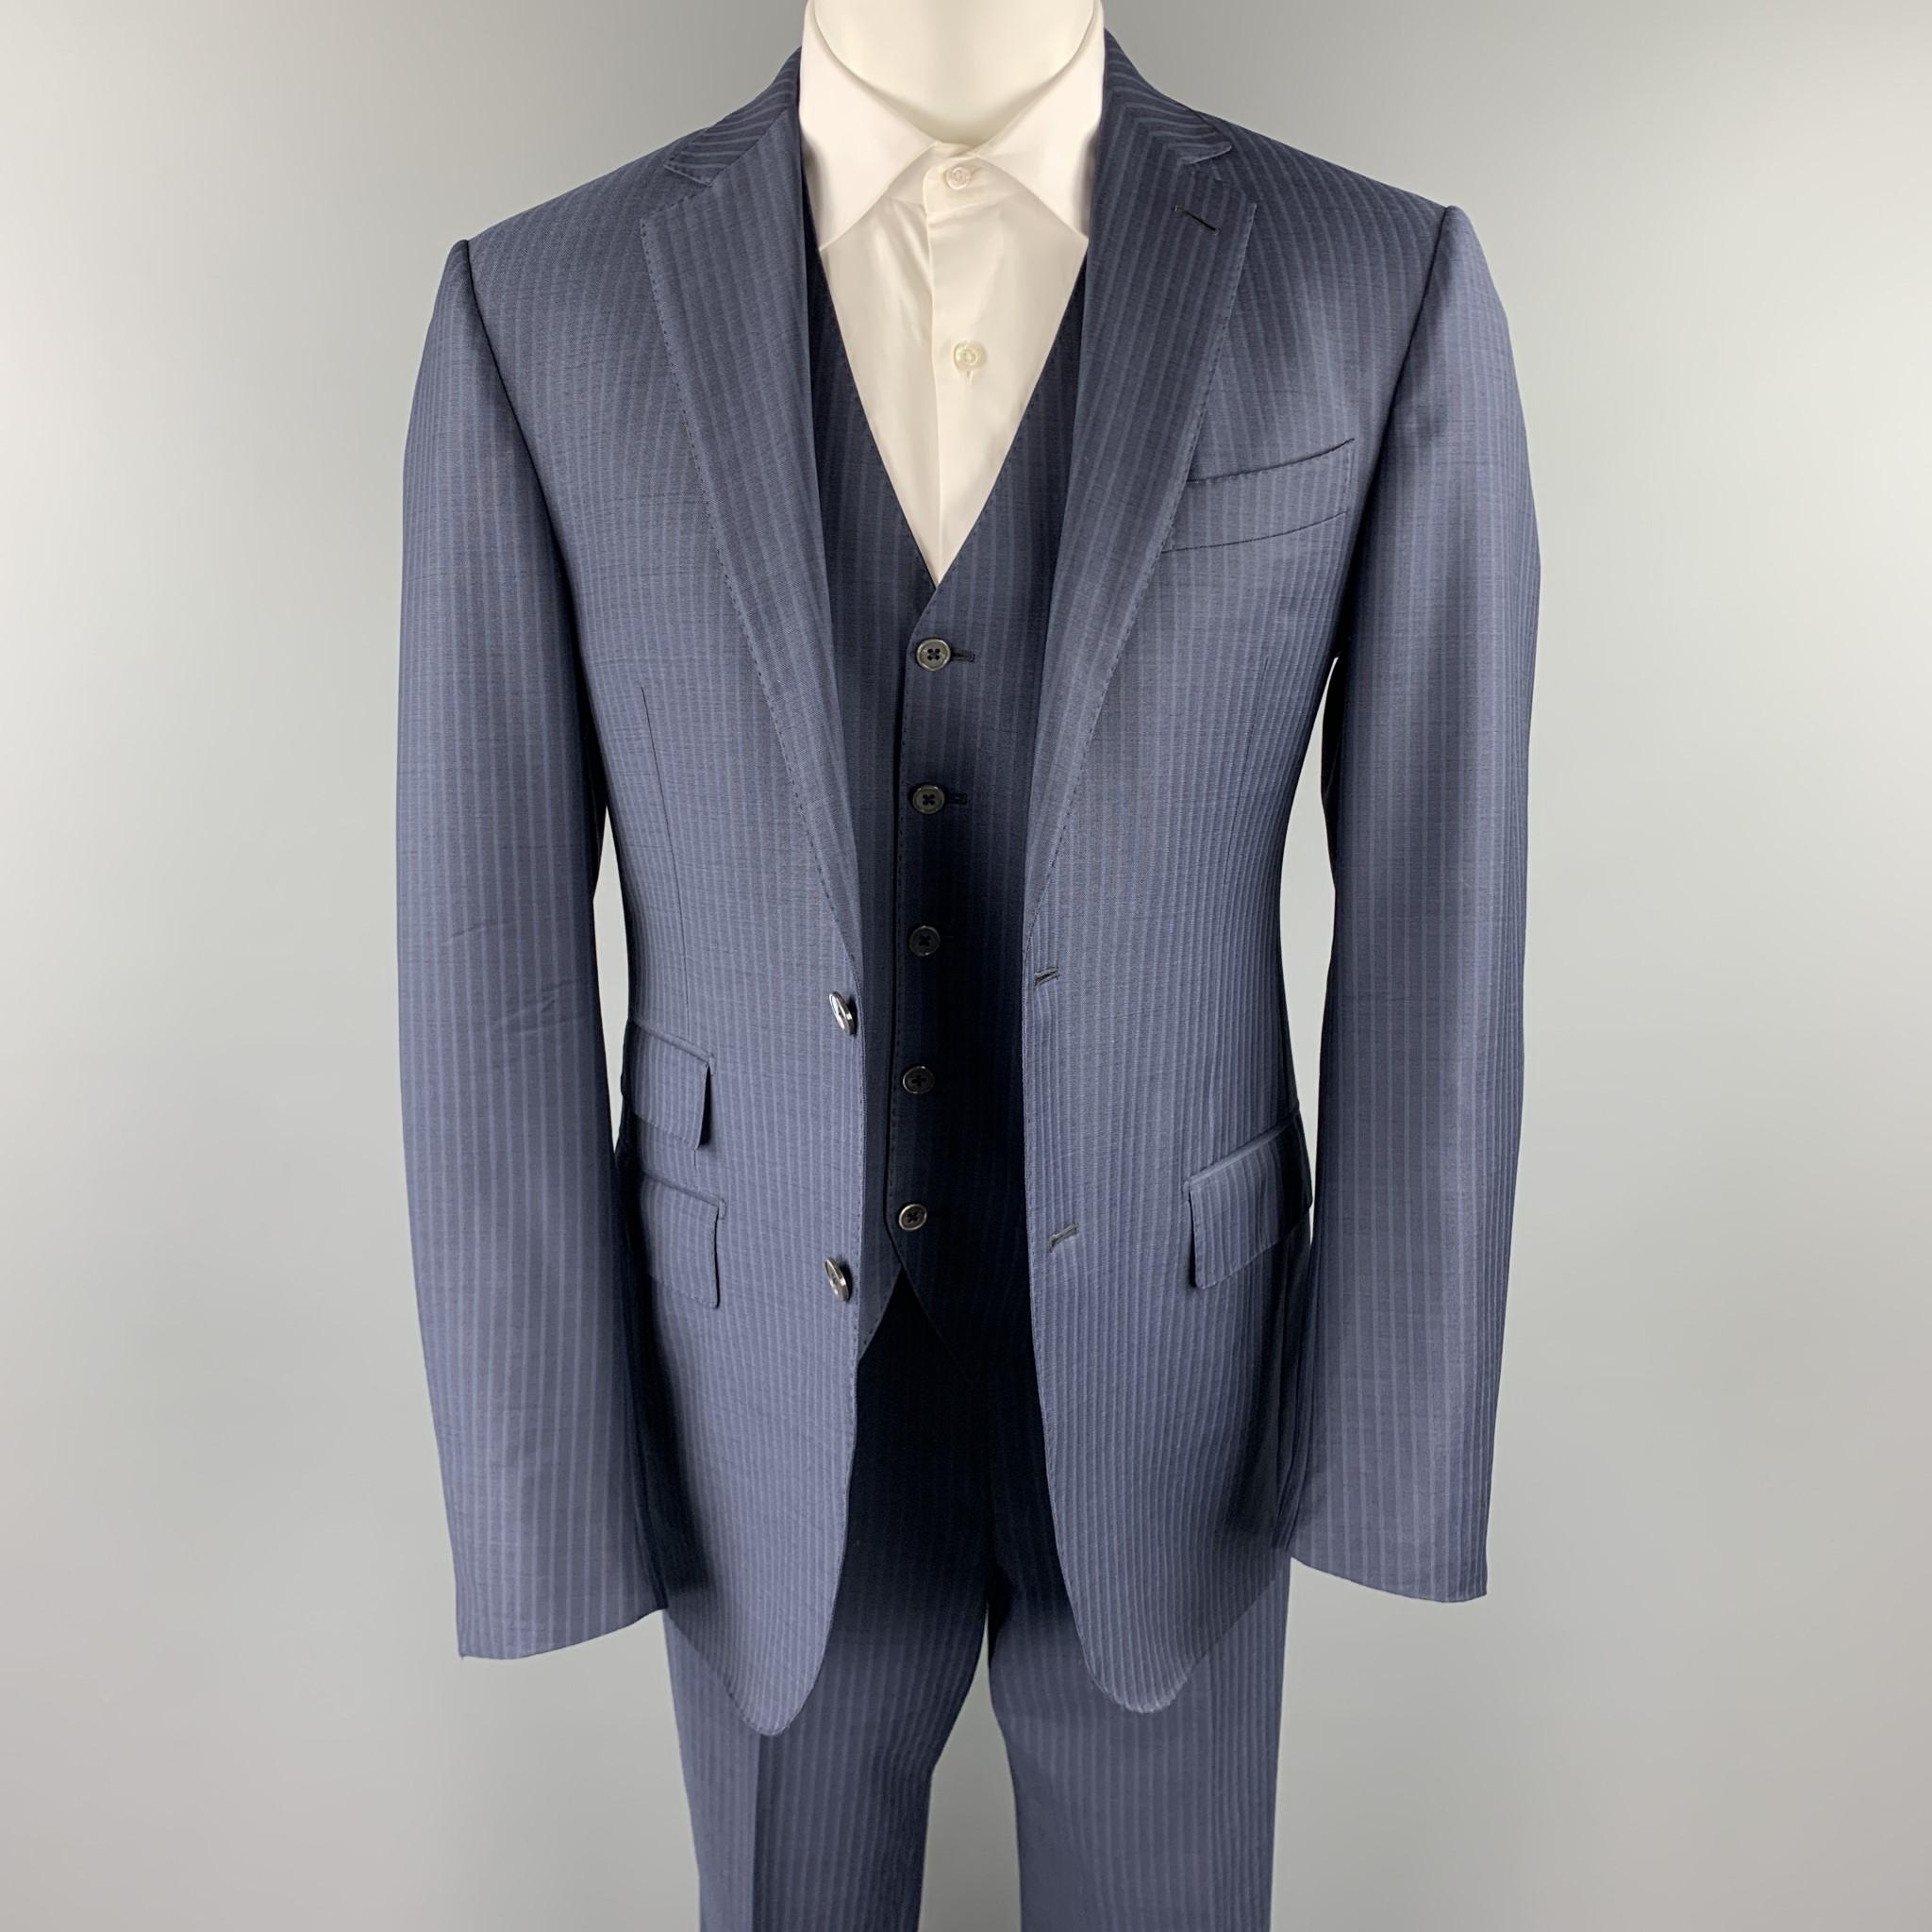 3 piece suit sale